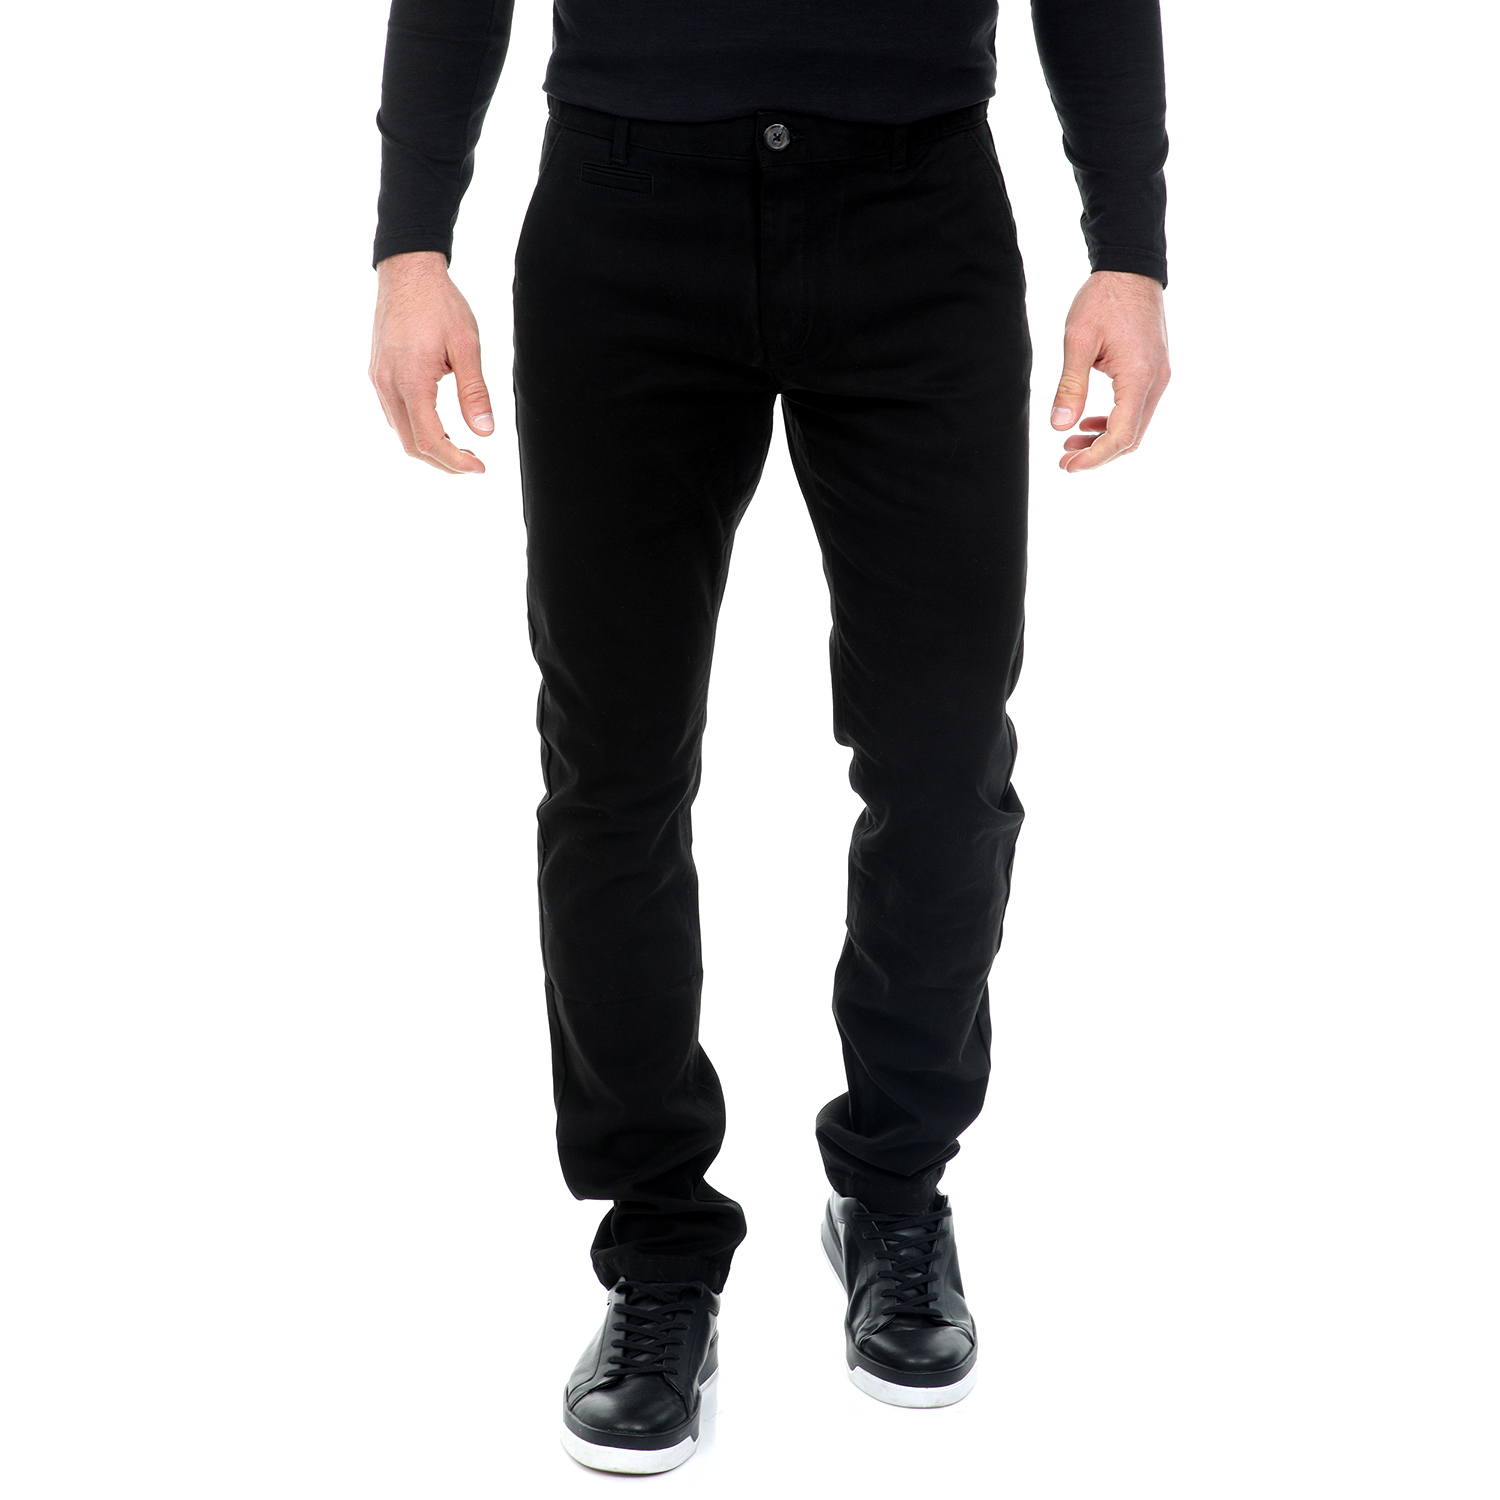 BATTERY - Ανδρικό chino παντελόνι BATTERY μαύρο Ανδρικά/Ρούχα/Παντελόνια/Chinos